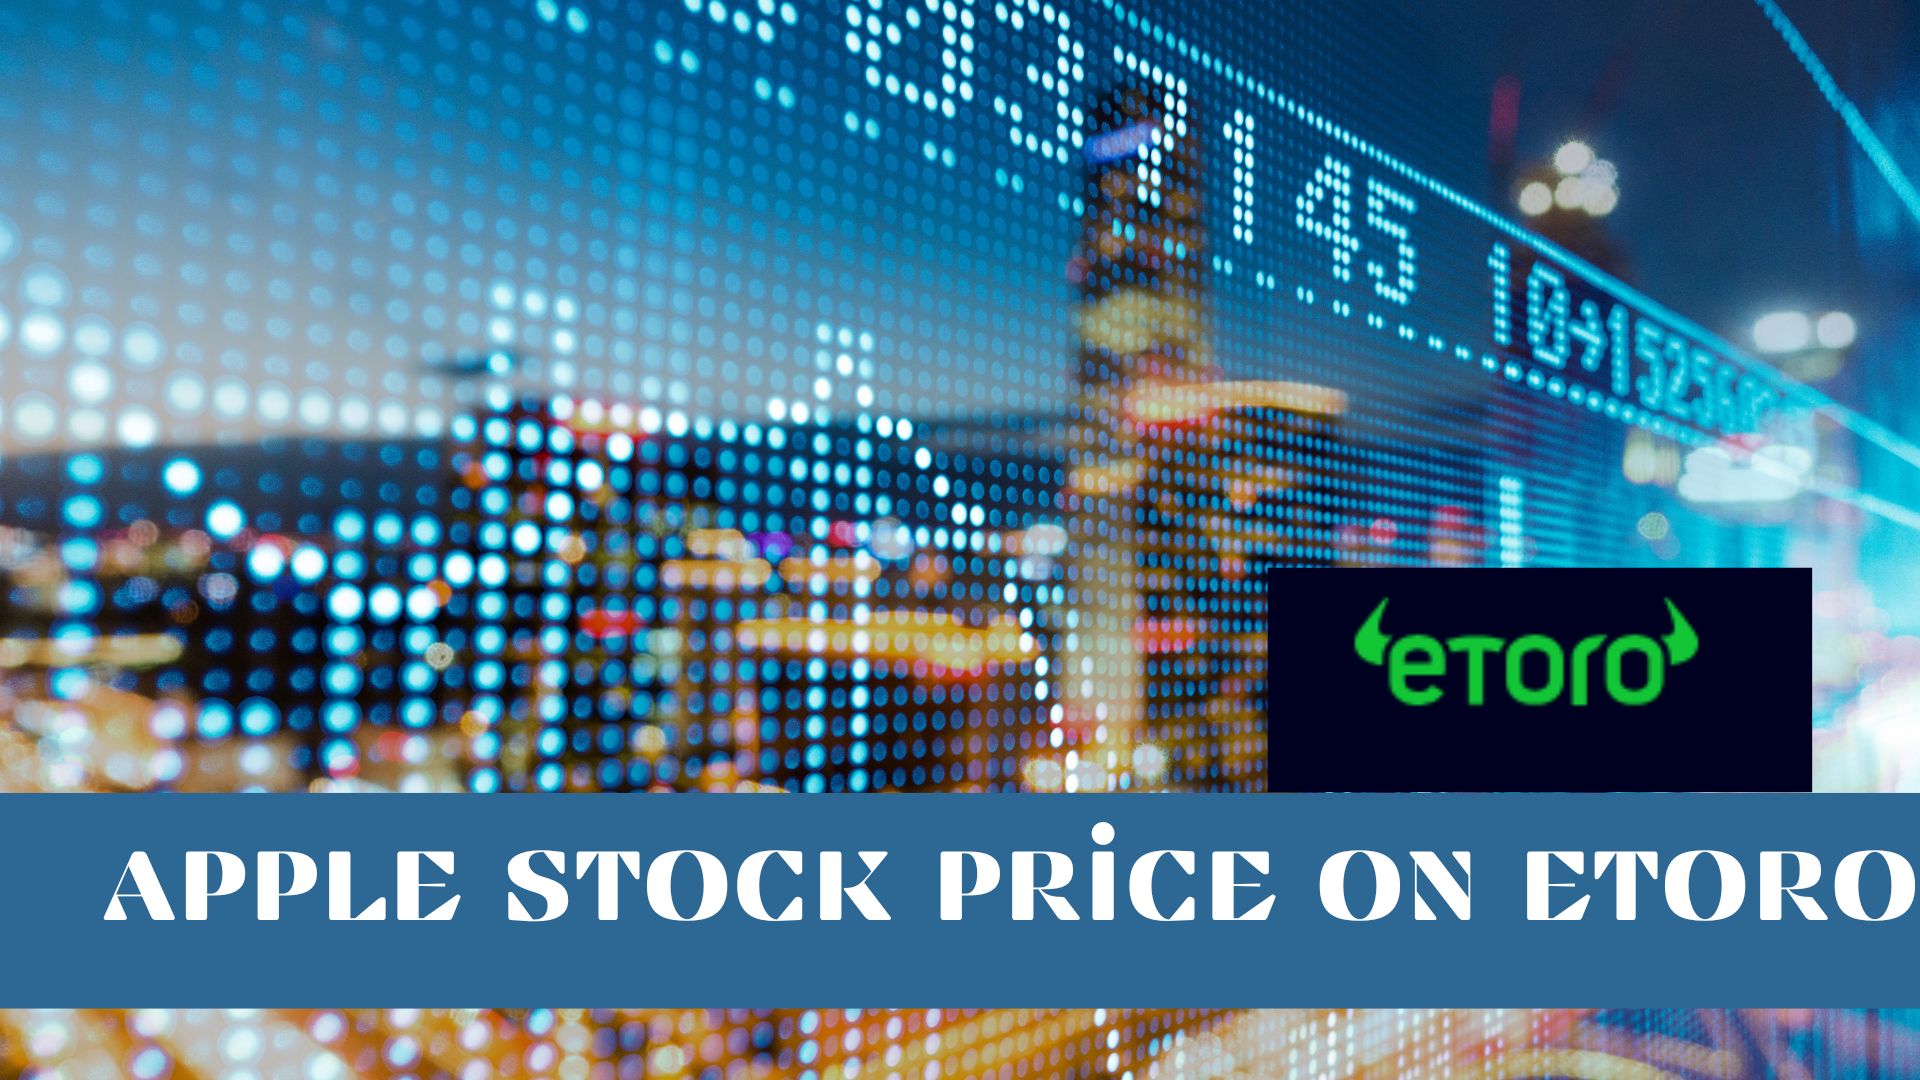 apple stock price on etoro